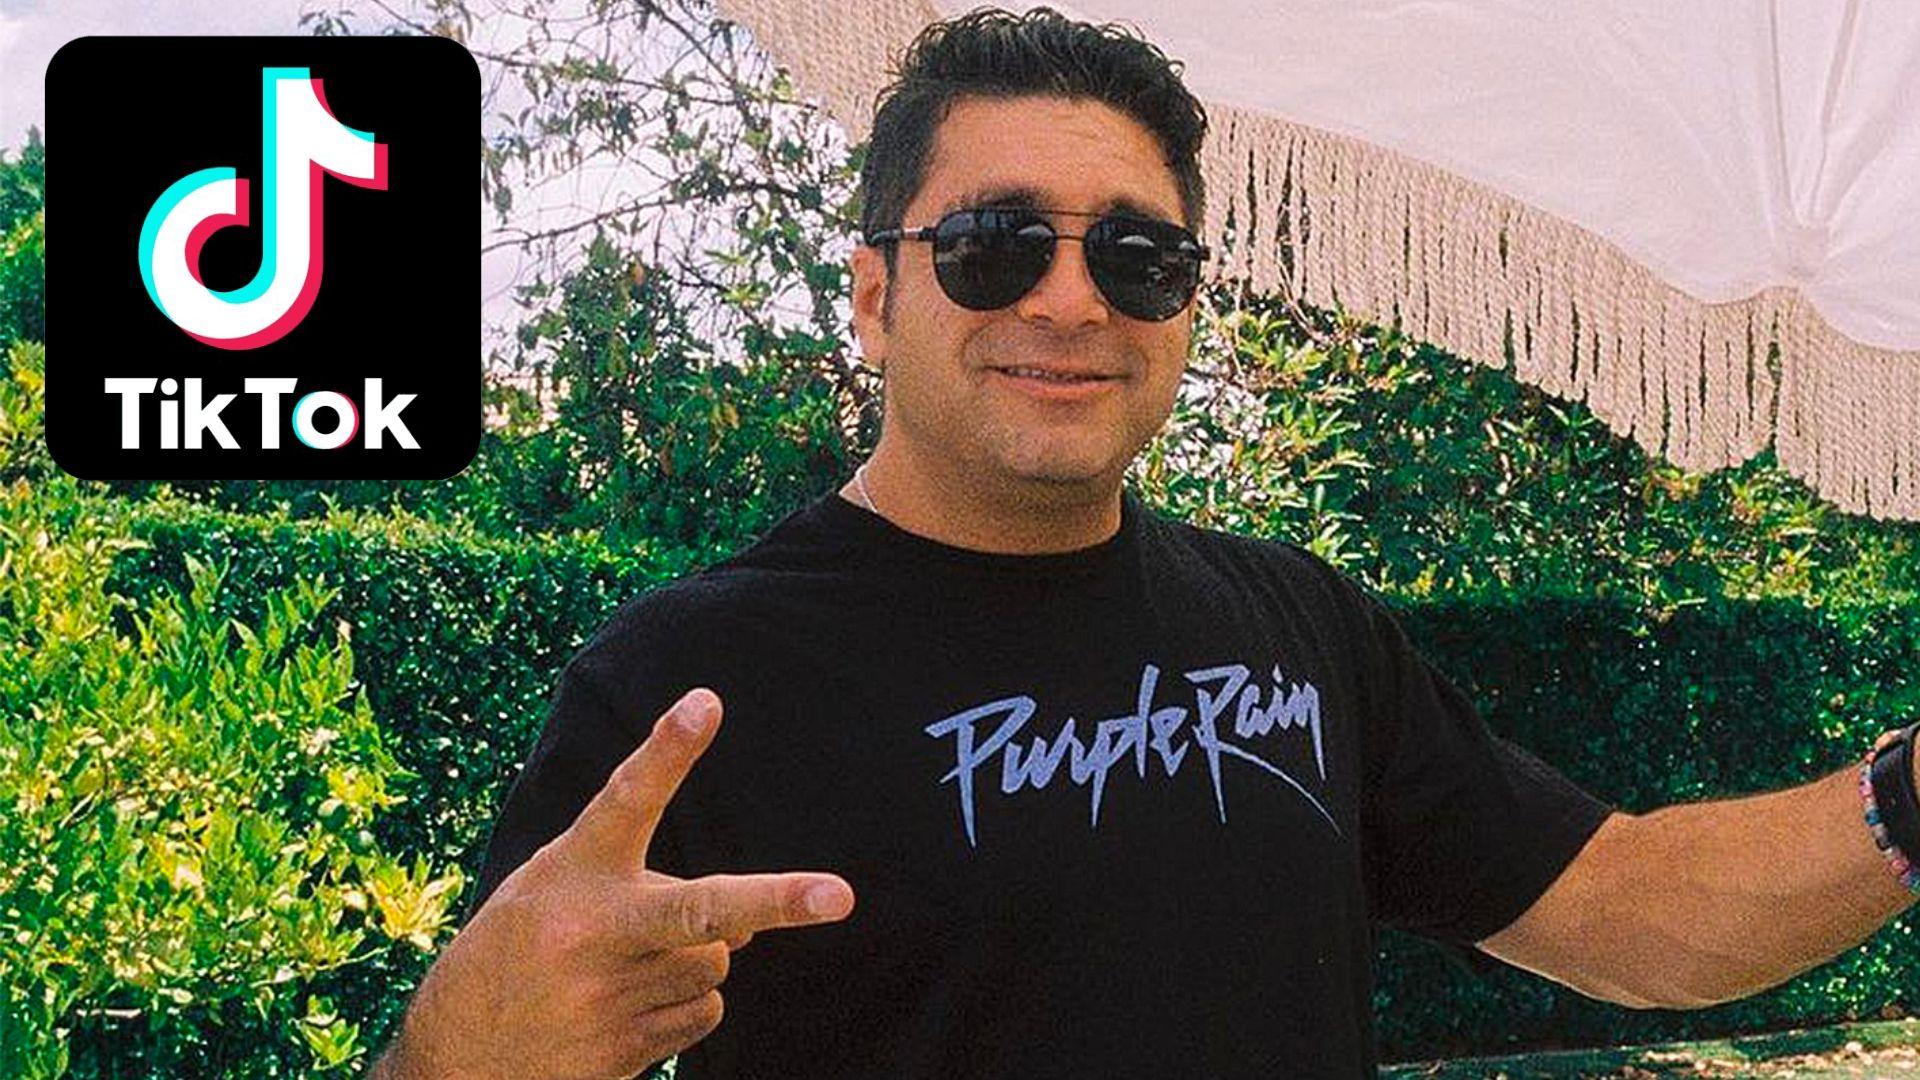 Monty Lopez in black shirt smiling at camera next to TikTok logo